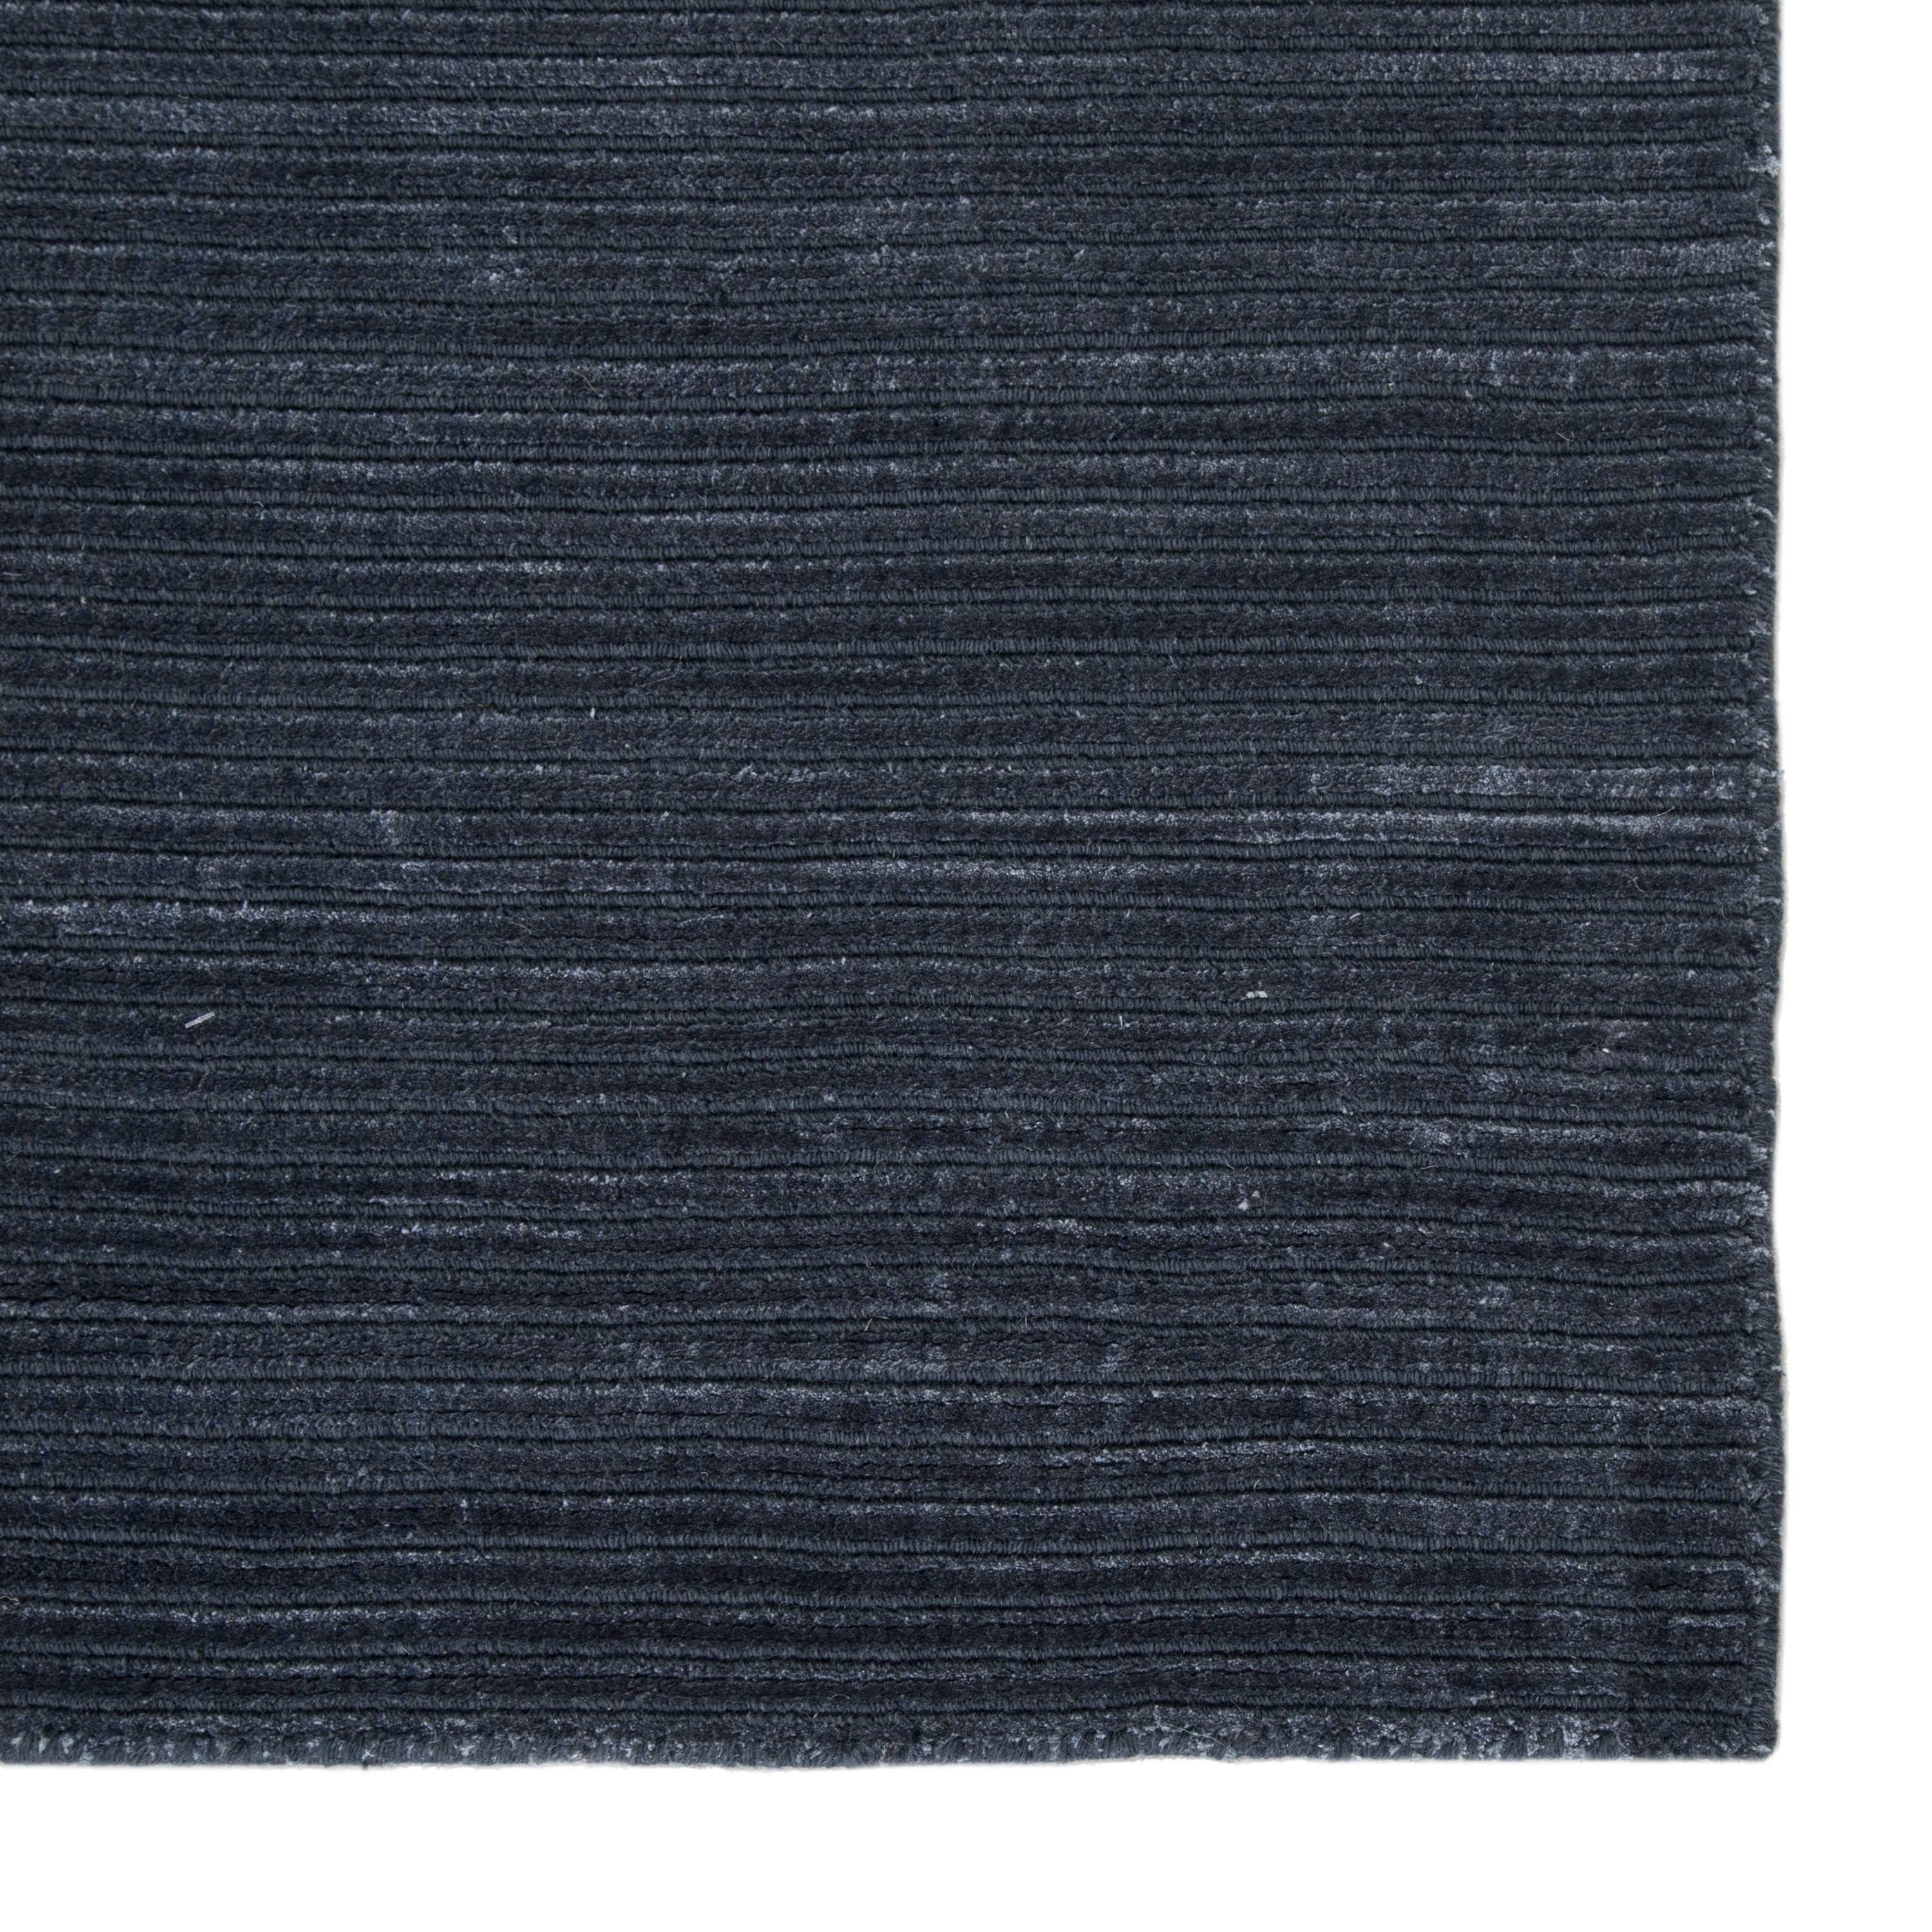 Basis Handmade Solid Dark Blue Area Rug (5' X 8') - Image 3